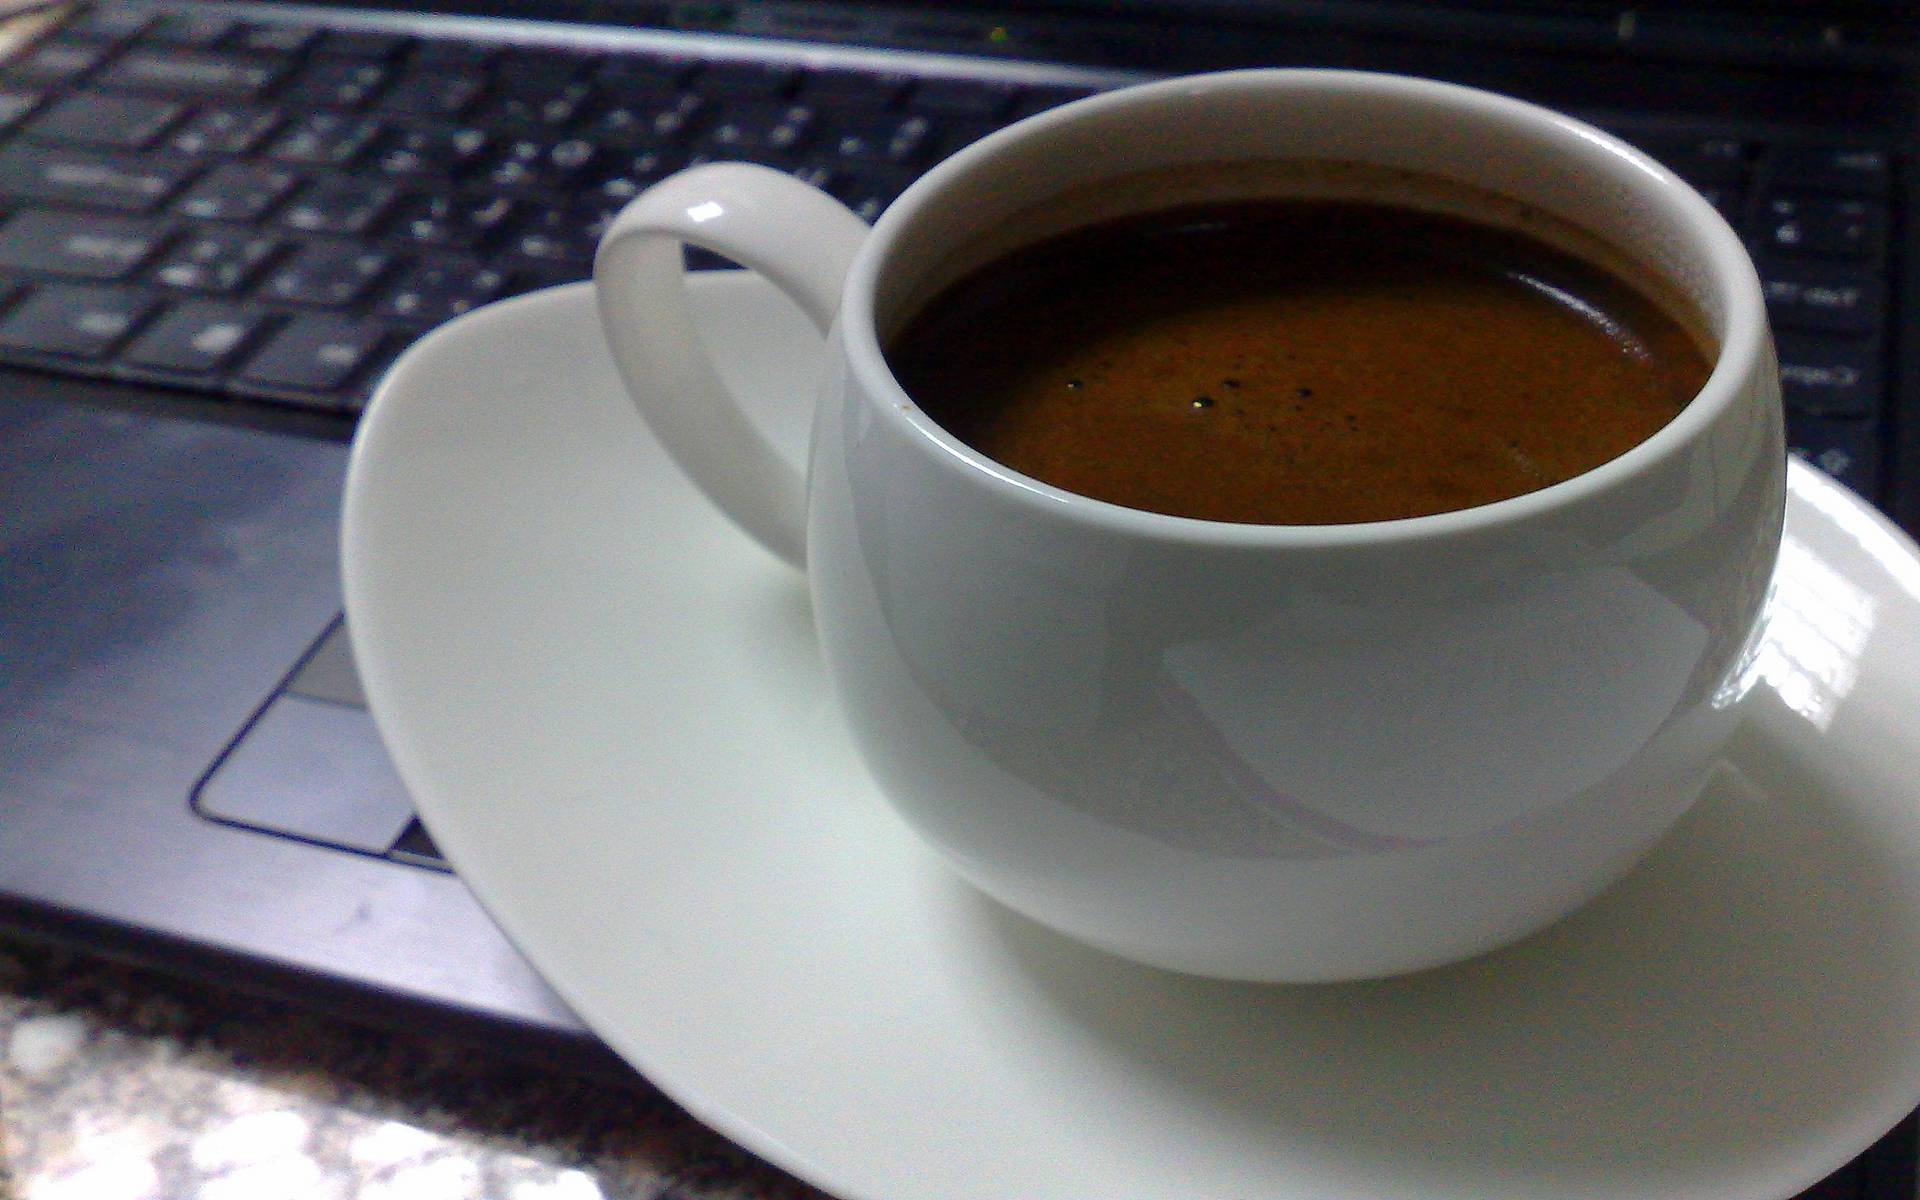 фото кофе в чашке на столе дома